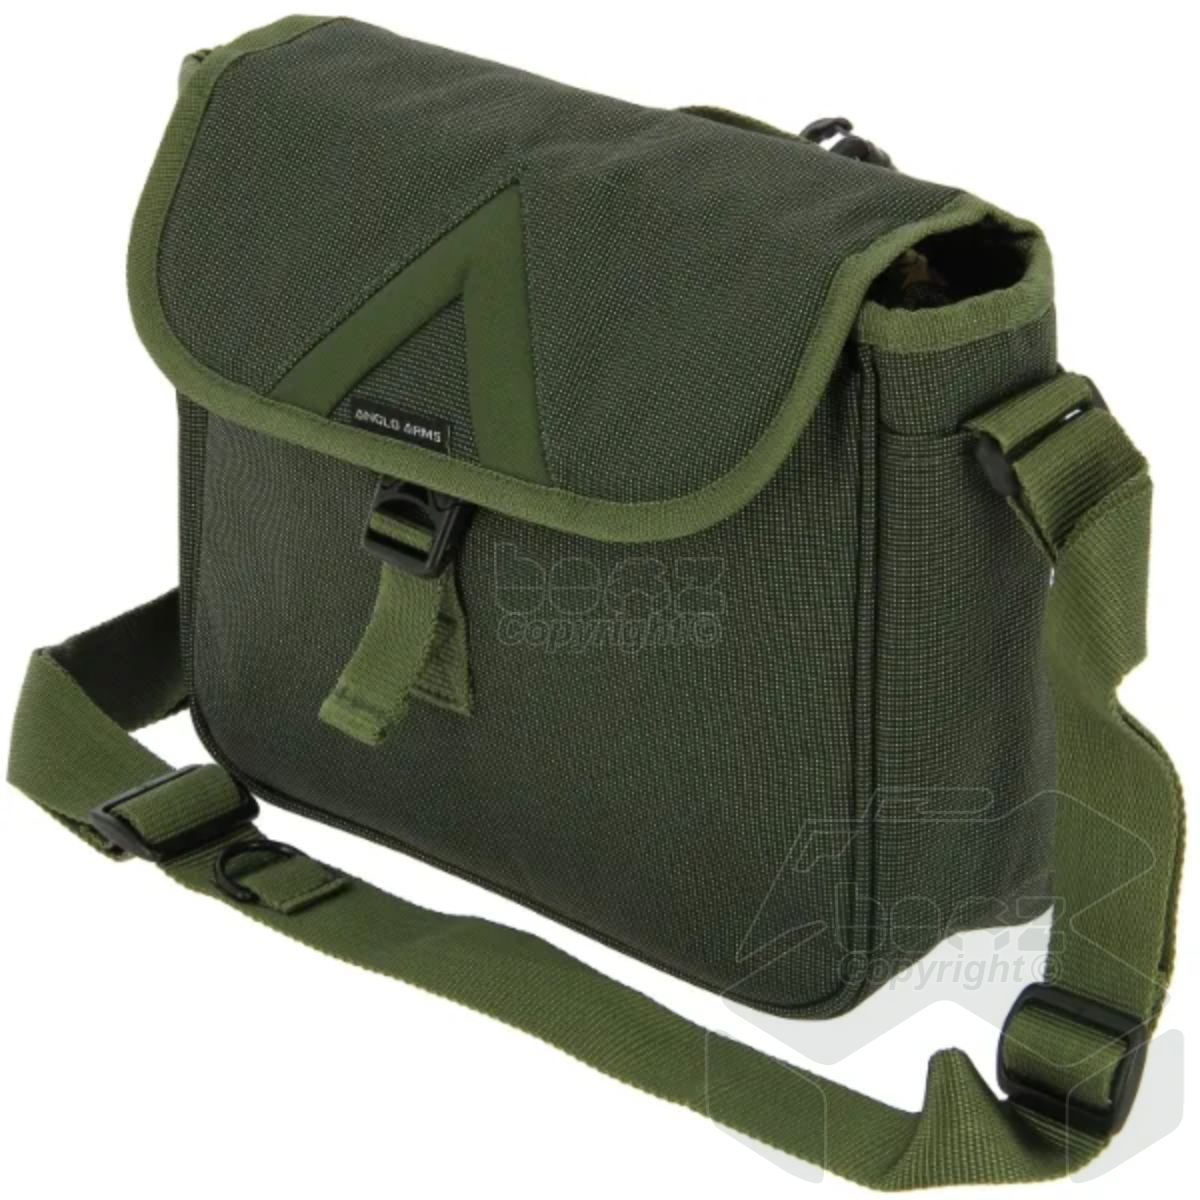 Anglo Arms Messenger Style Cartridge Bag